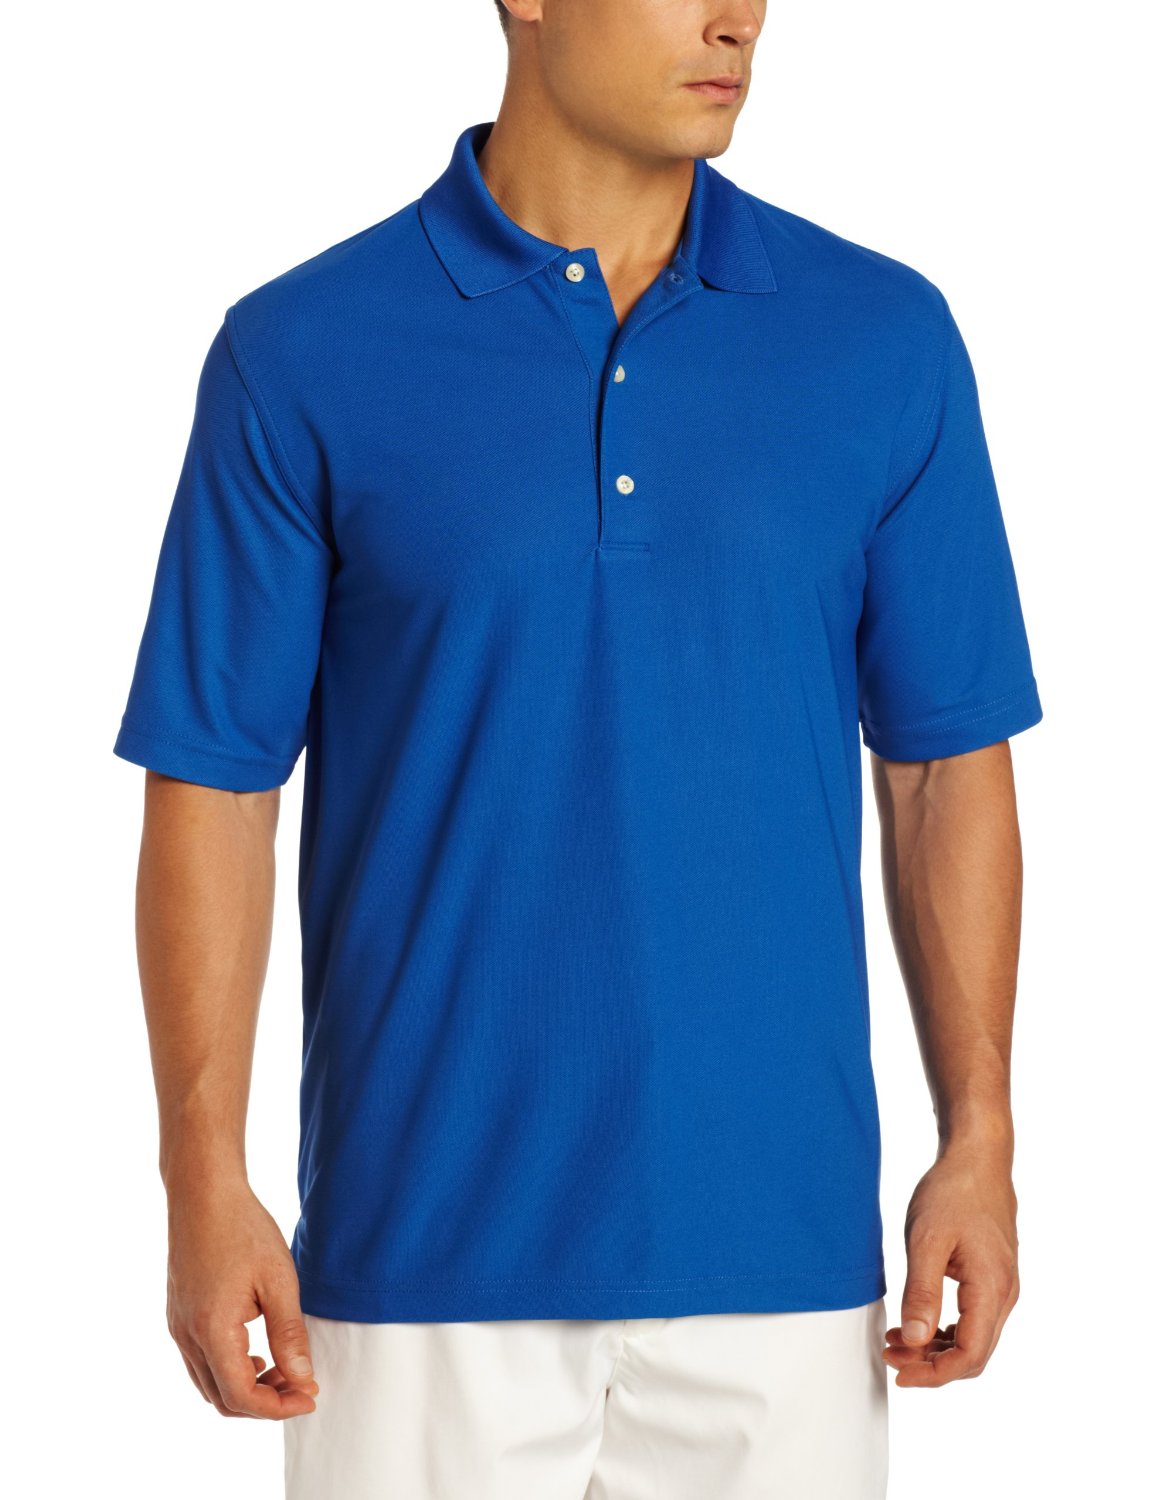 Greg Norman Mens ProTek Micro Pique Short Sleeve Golf Polo Shirts